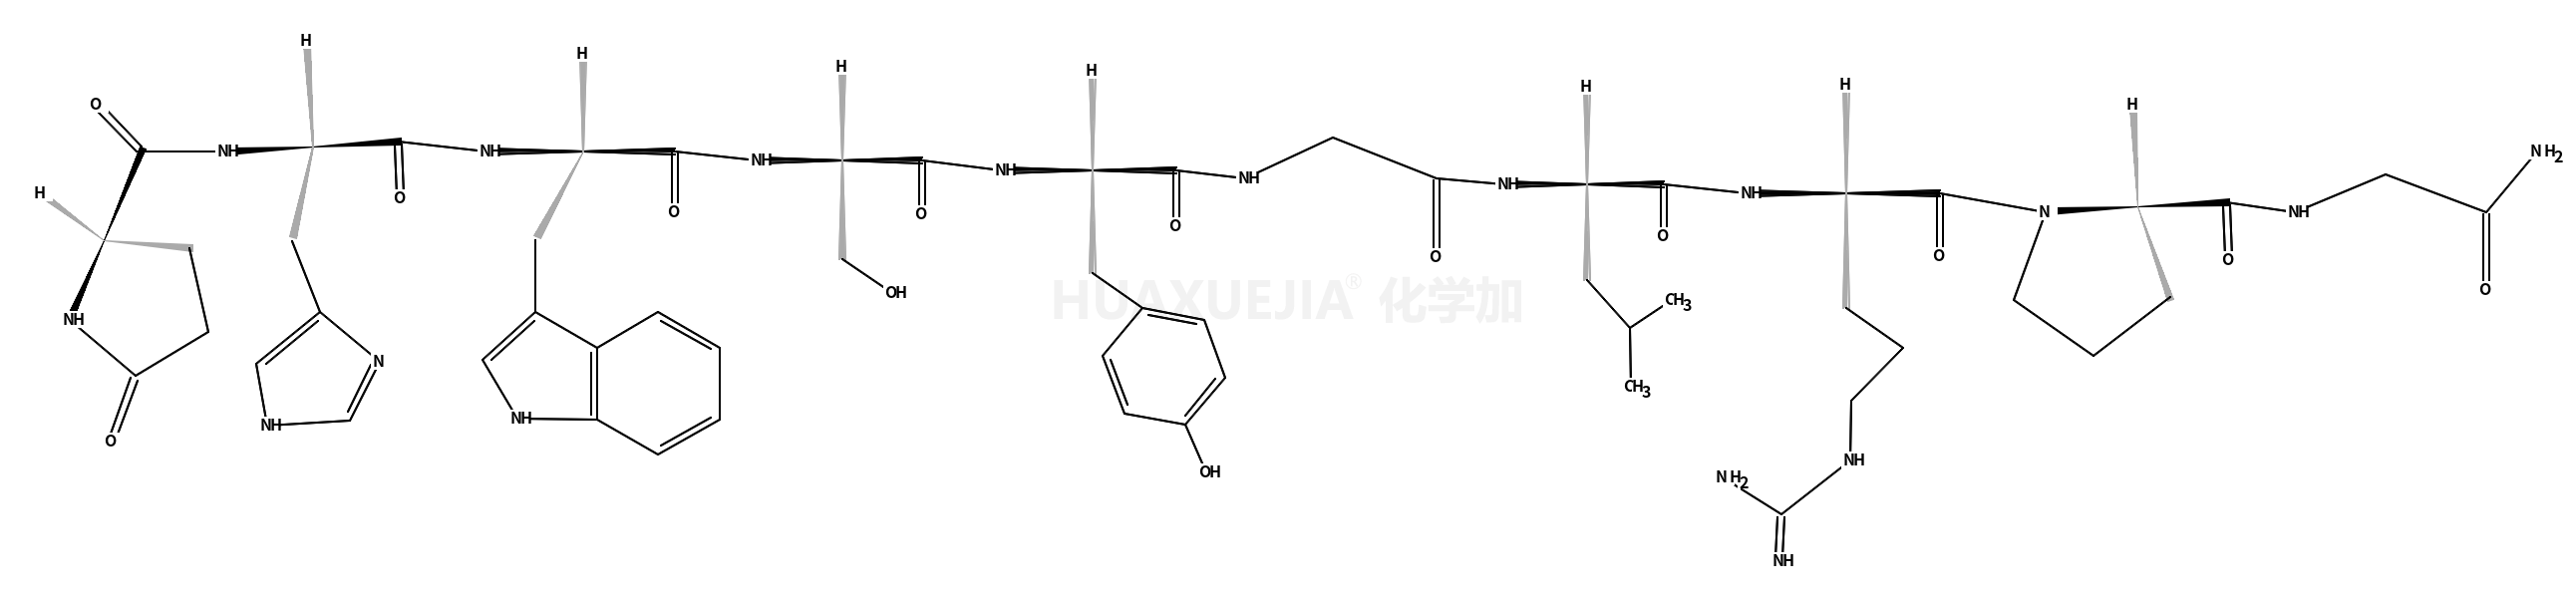 5-Oxo-L-prolyl-L-histidyl-L-tryptophyl-L-seryl-L-tyrosylglycyl-L-leucyl-L-arginyl-L-prolylglycinamide